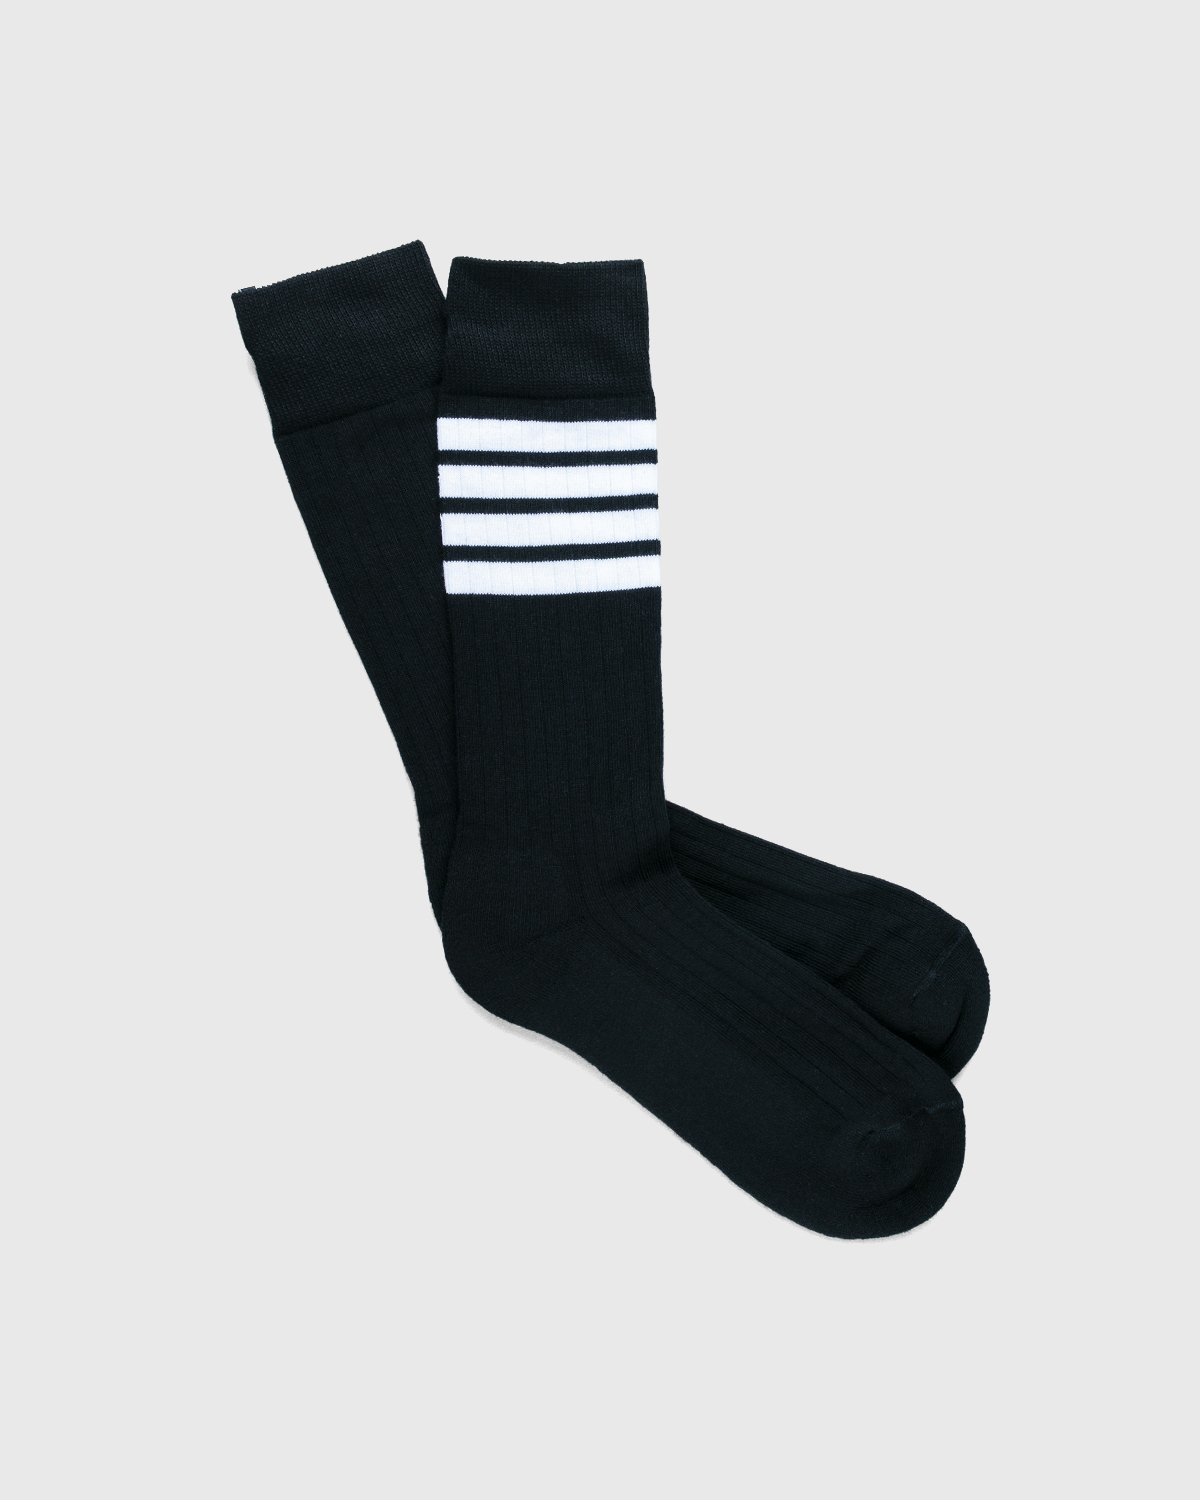 Thom Browne x Highsnobiety - Women's Mid-Calf Socks Grey - Accessories - Grey - Image 3